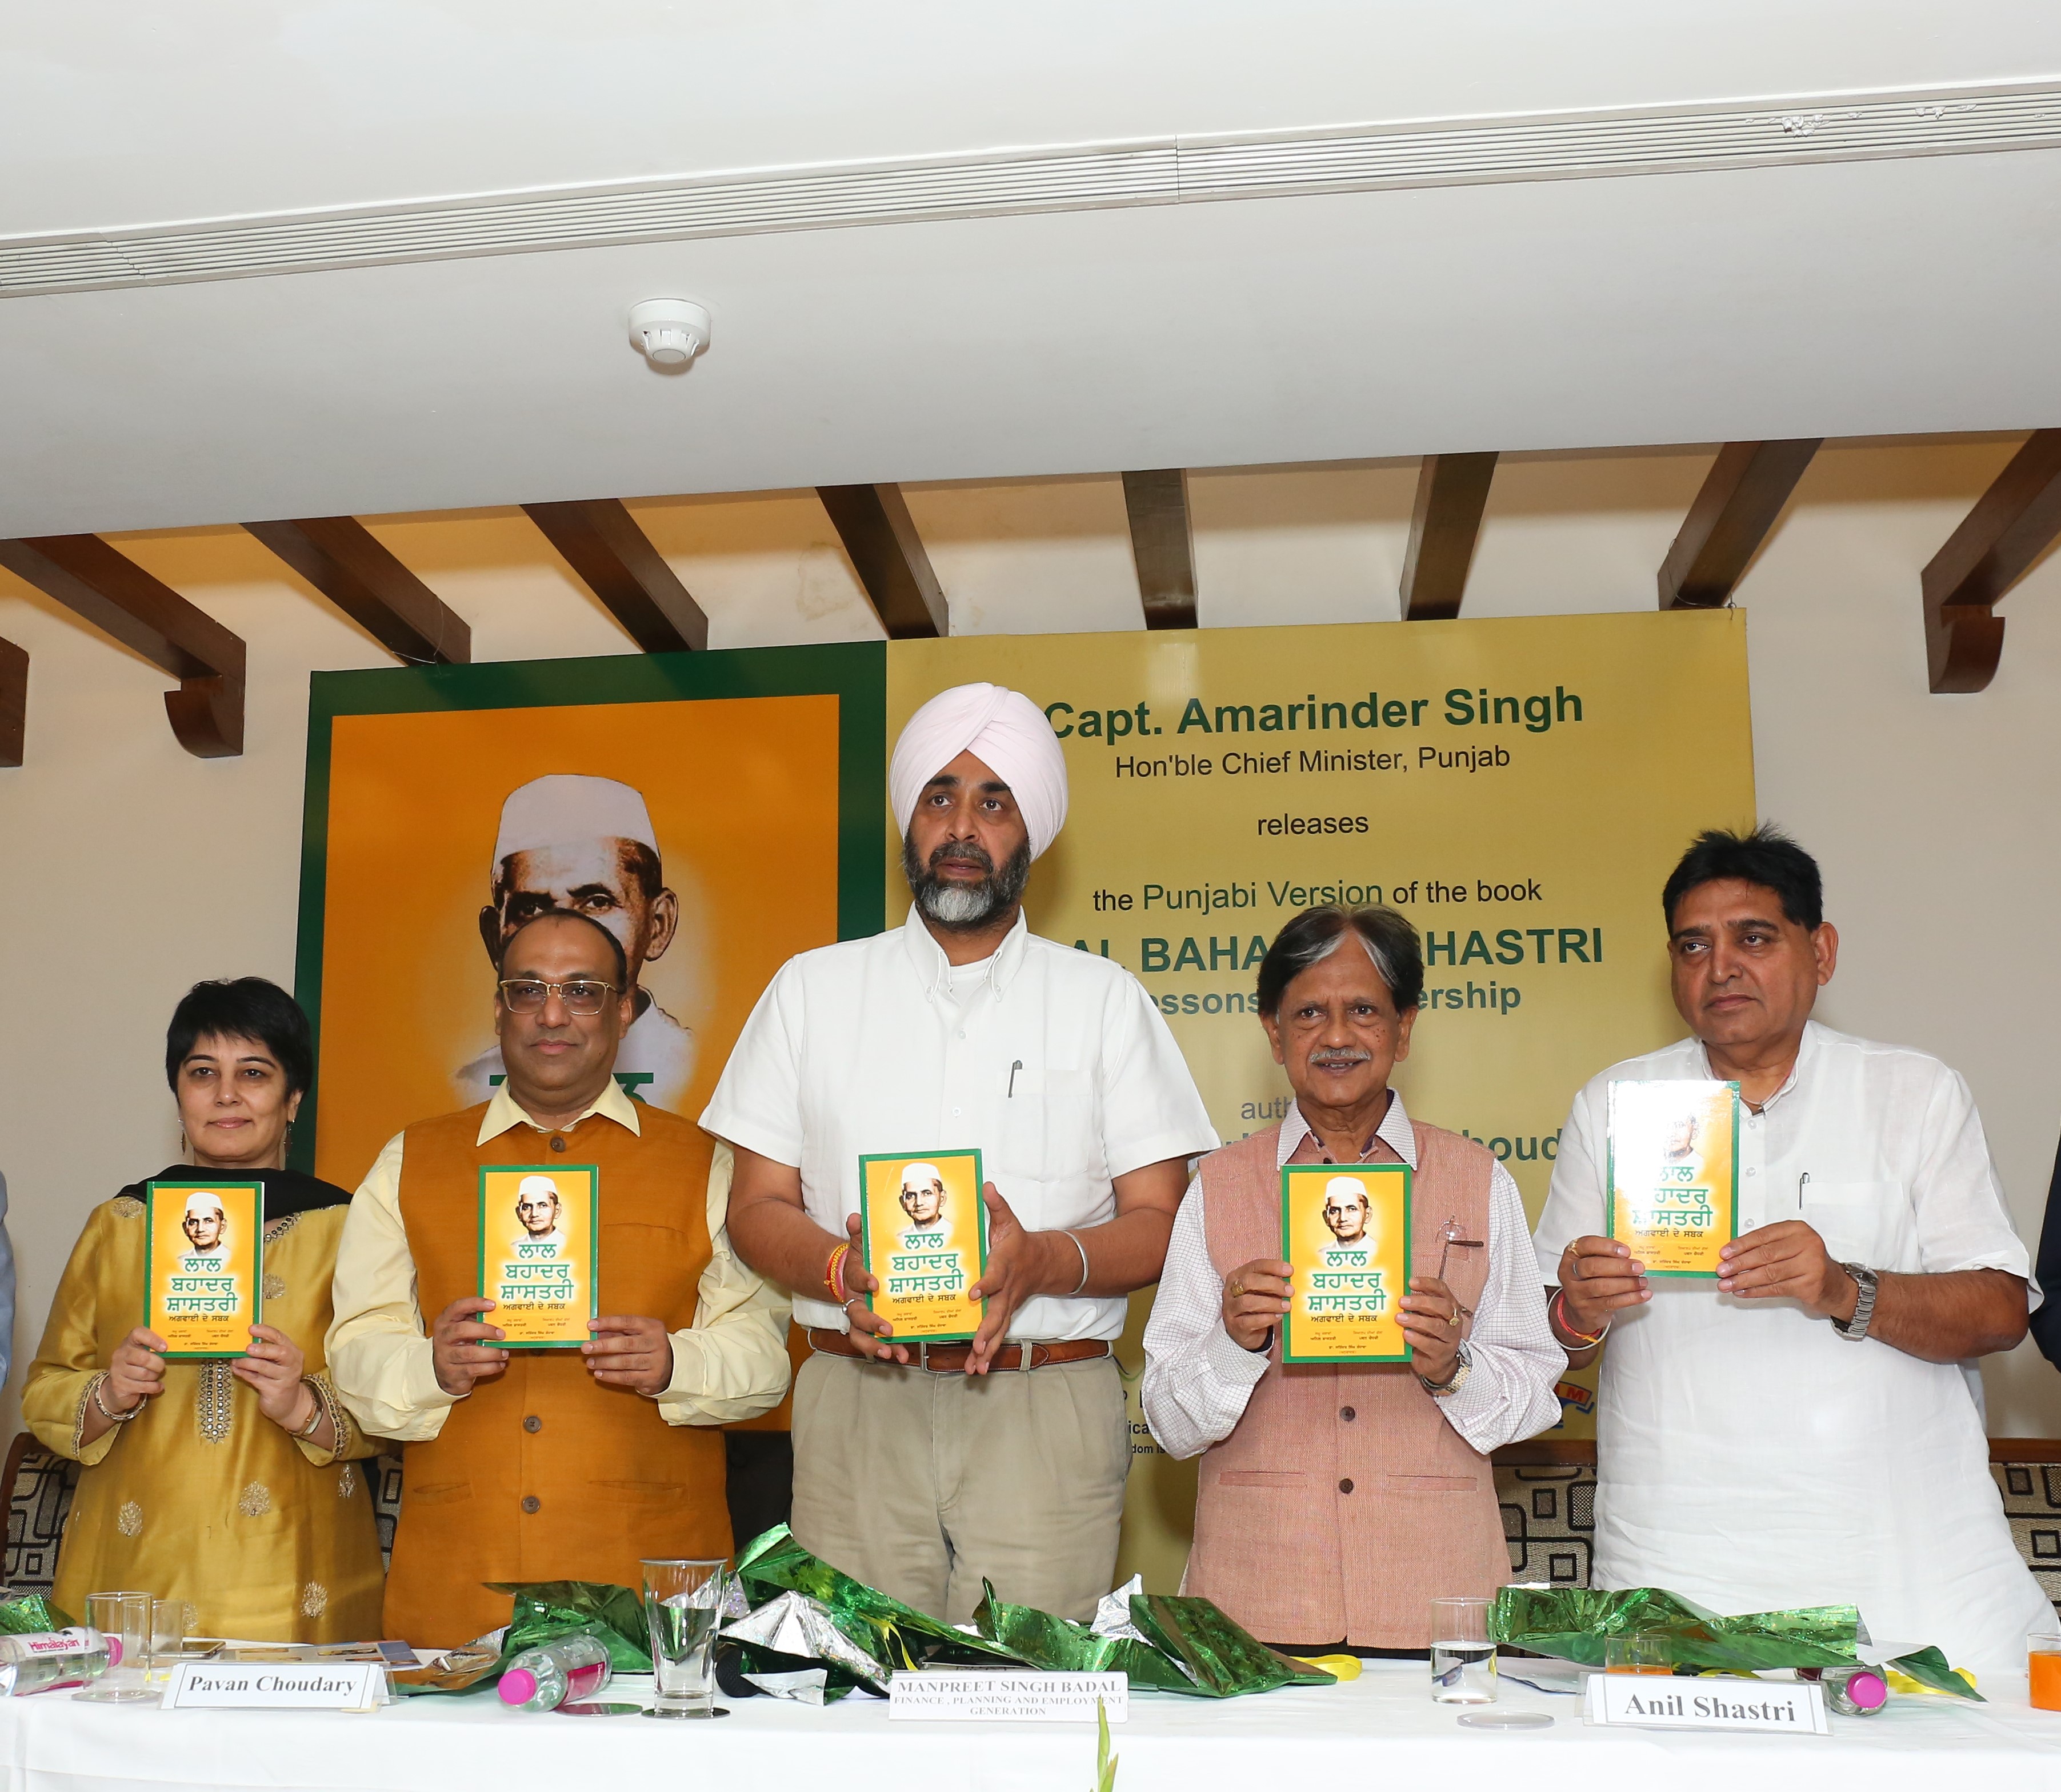 Punjabi book “Lal Bahadur Shastri: Agvaai De Sabak” Released in Chandigarh